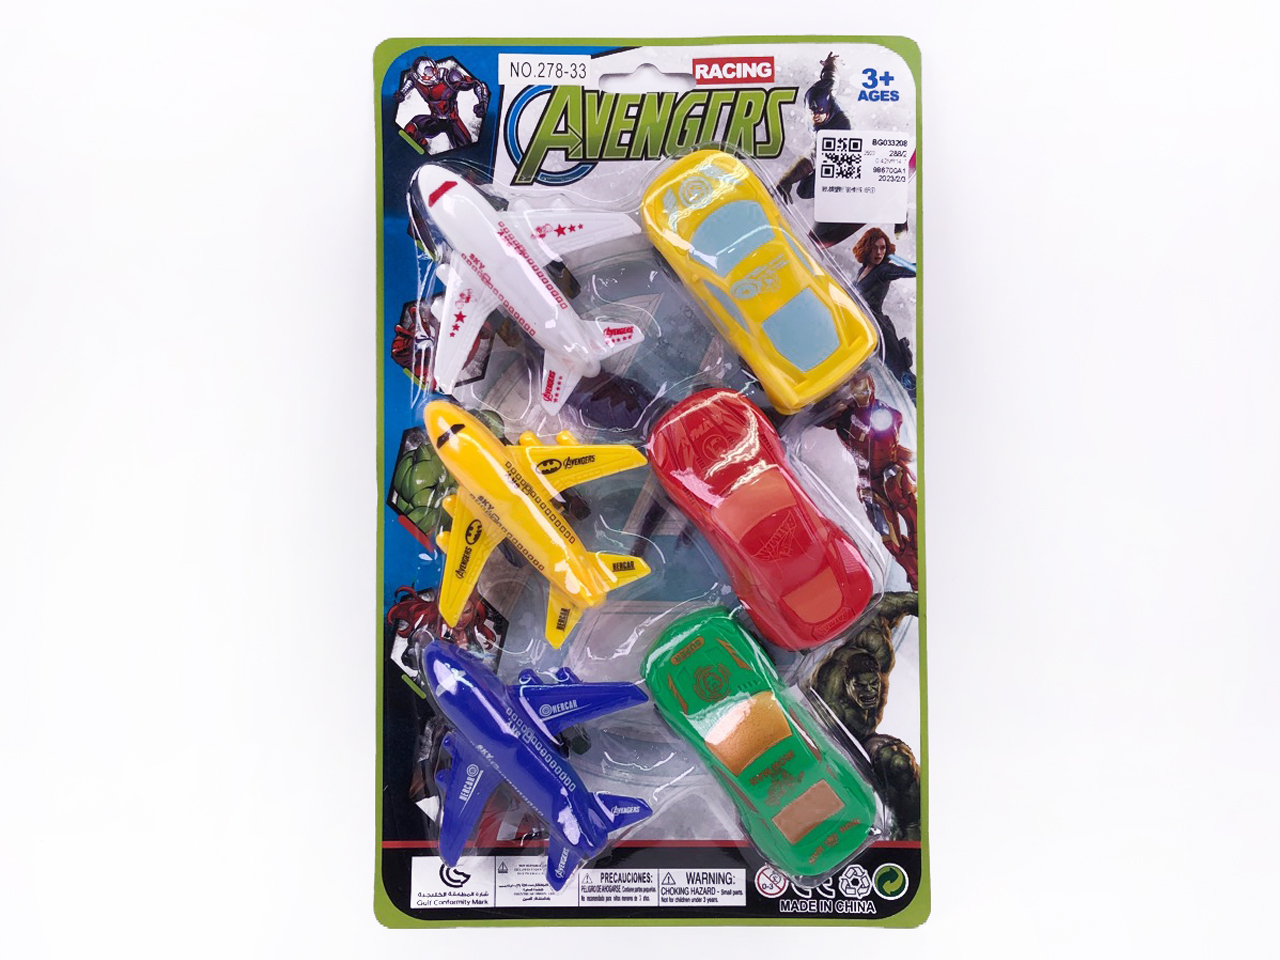 Free Wheel Airplane & Free Wheel Car(6in1) toys